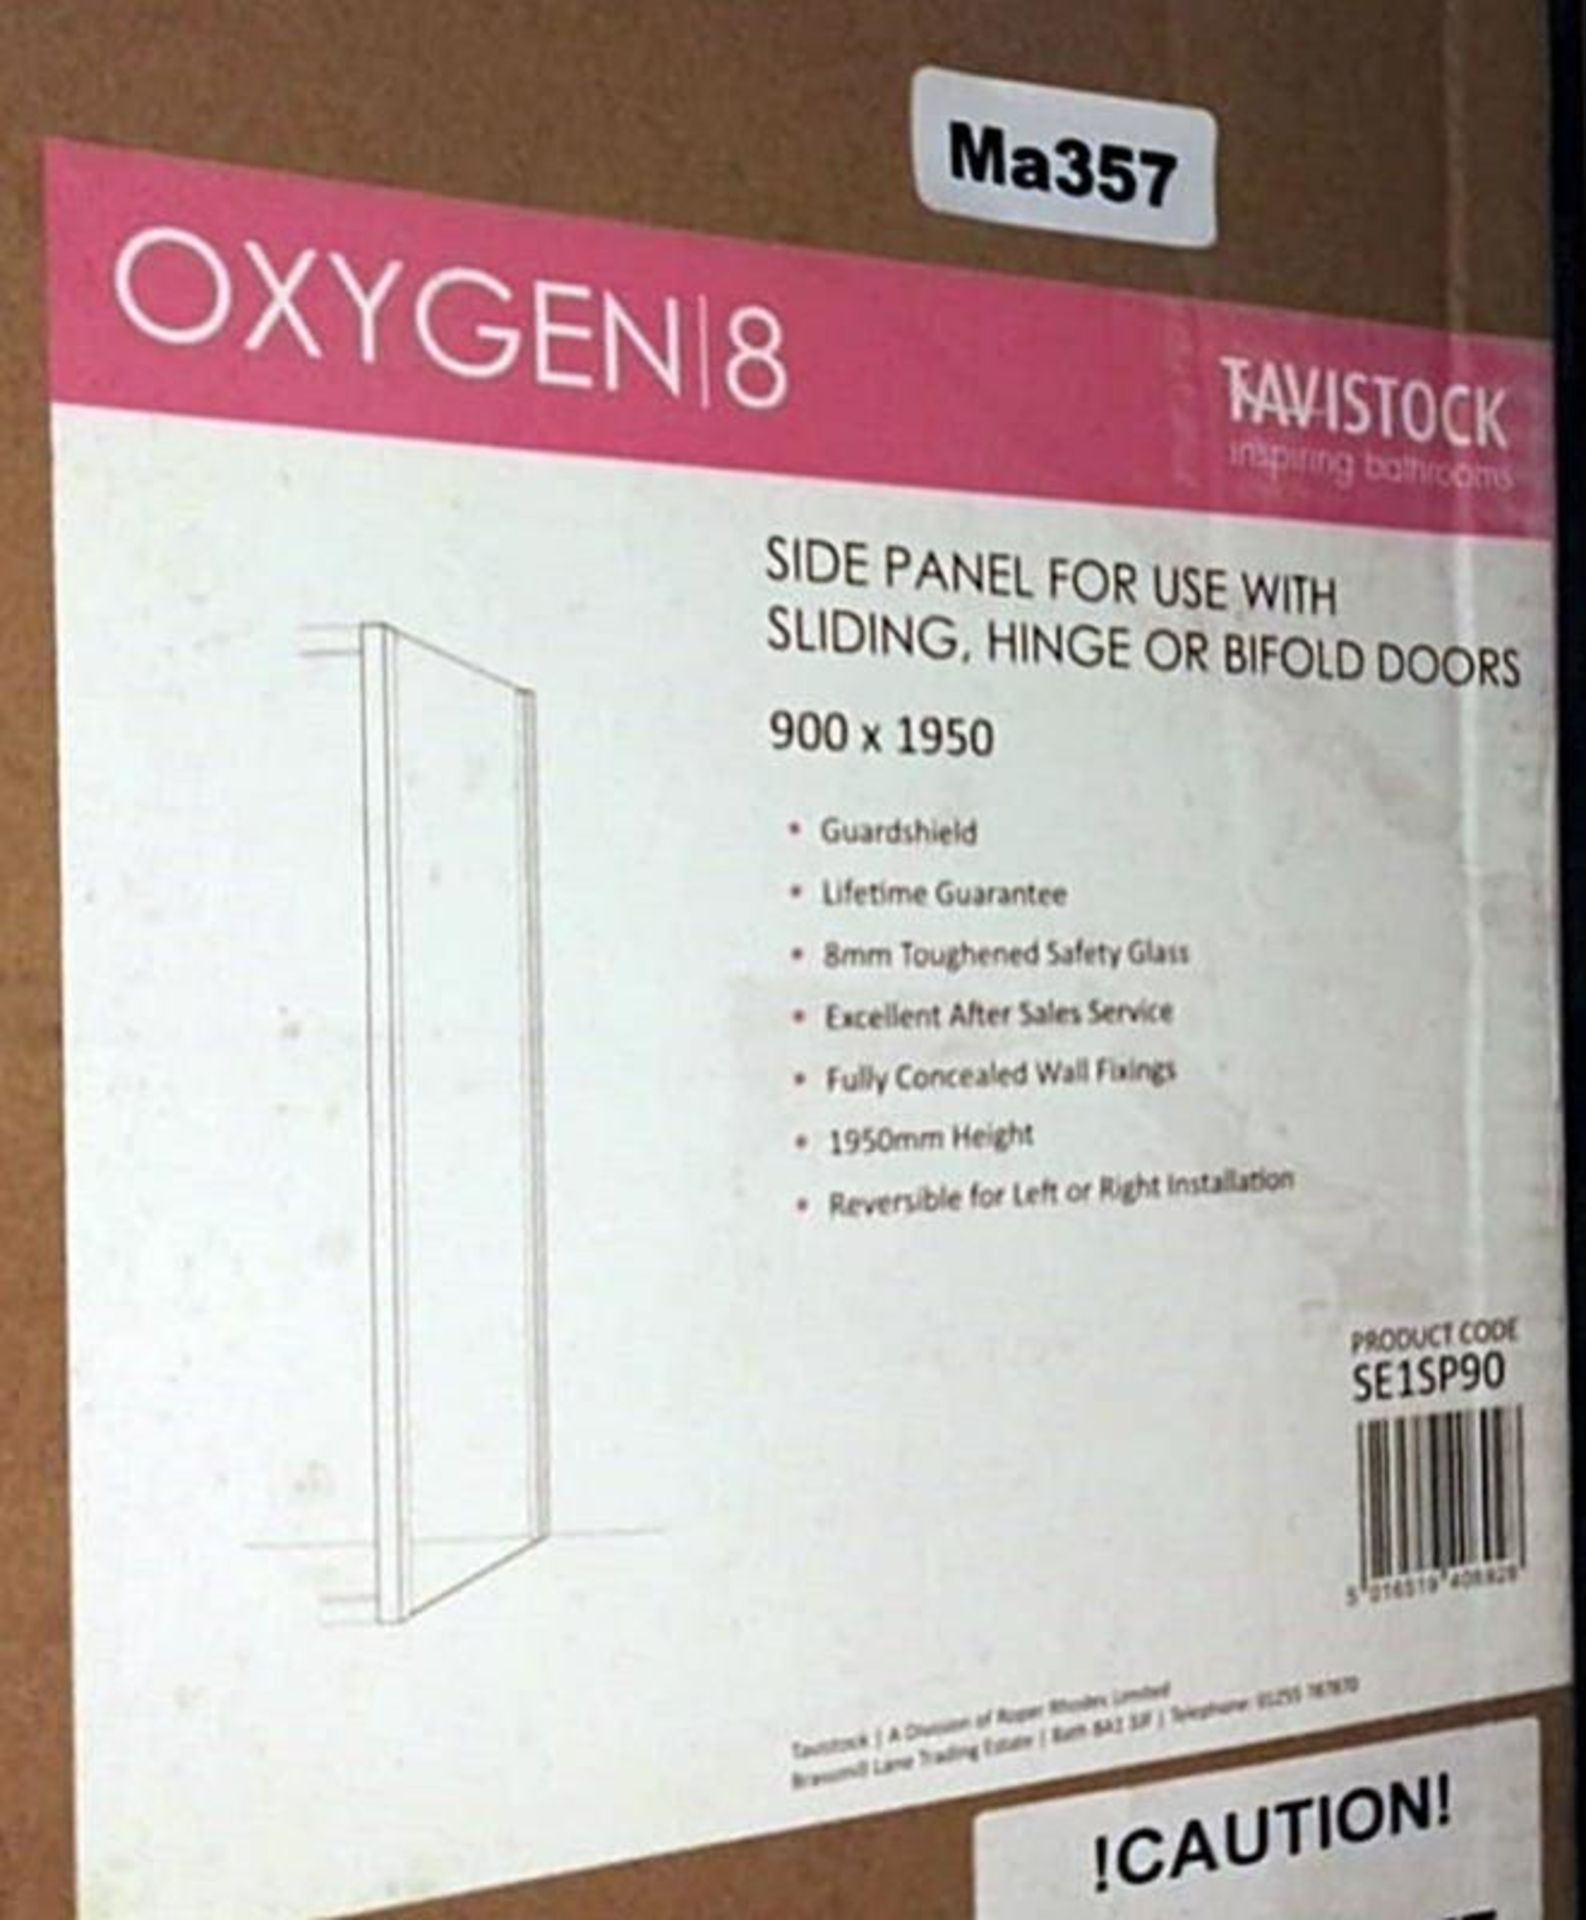 1 x Tavistock 'OXYGEN 8' Side Panel - Dimensions: 900 x 1950 - Ref: ma357B - New / Boxed Stock - CL0 - Image 2 of 2